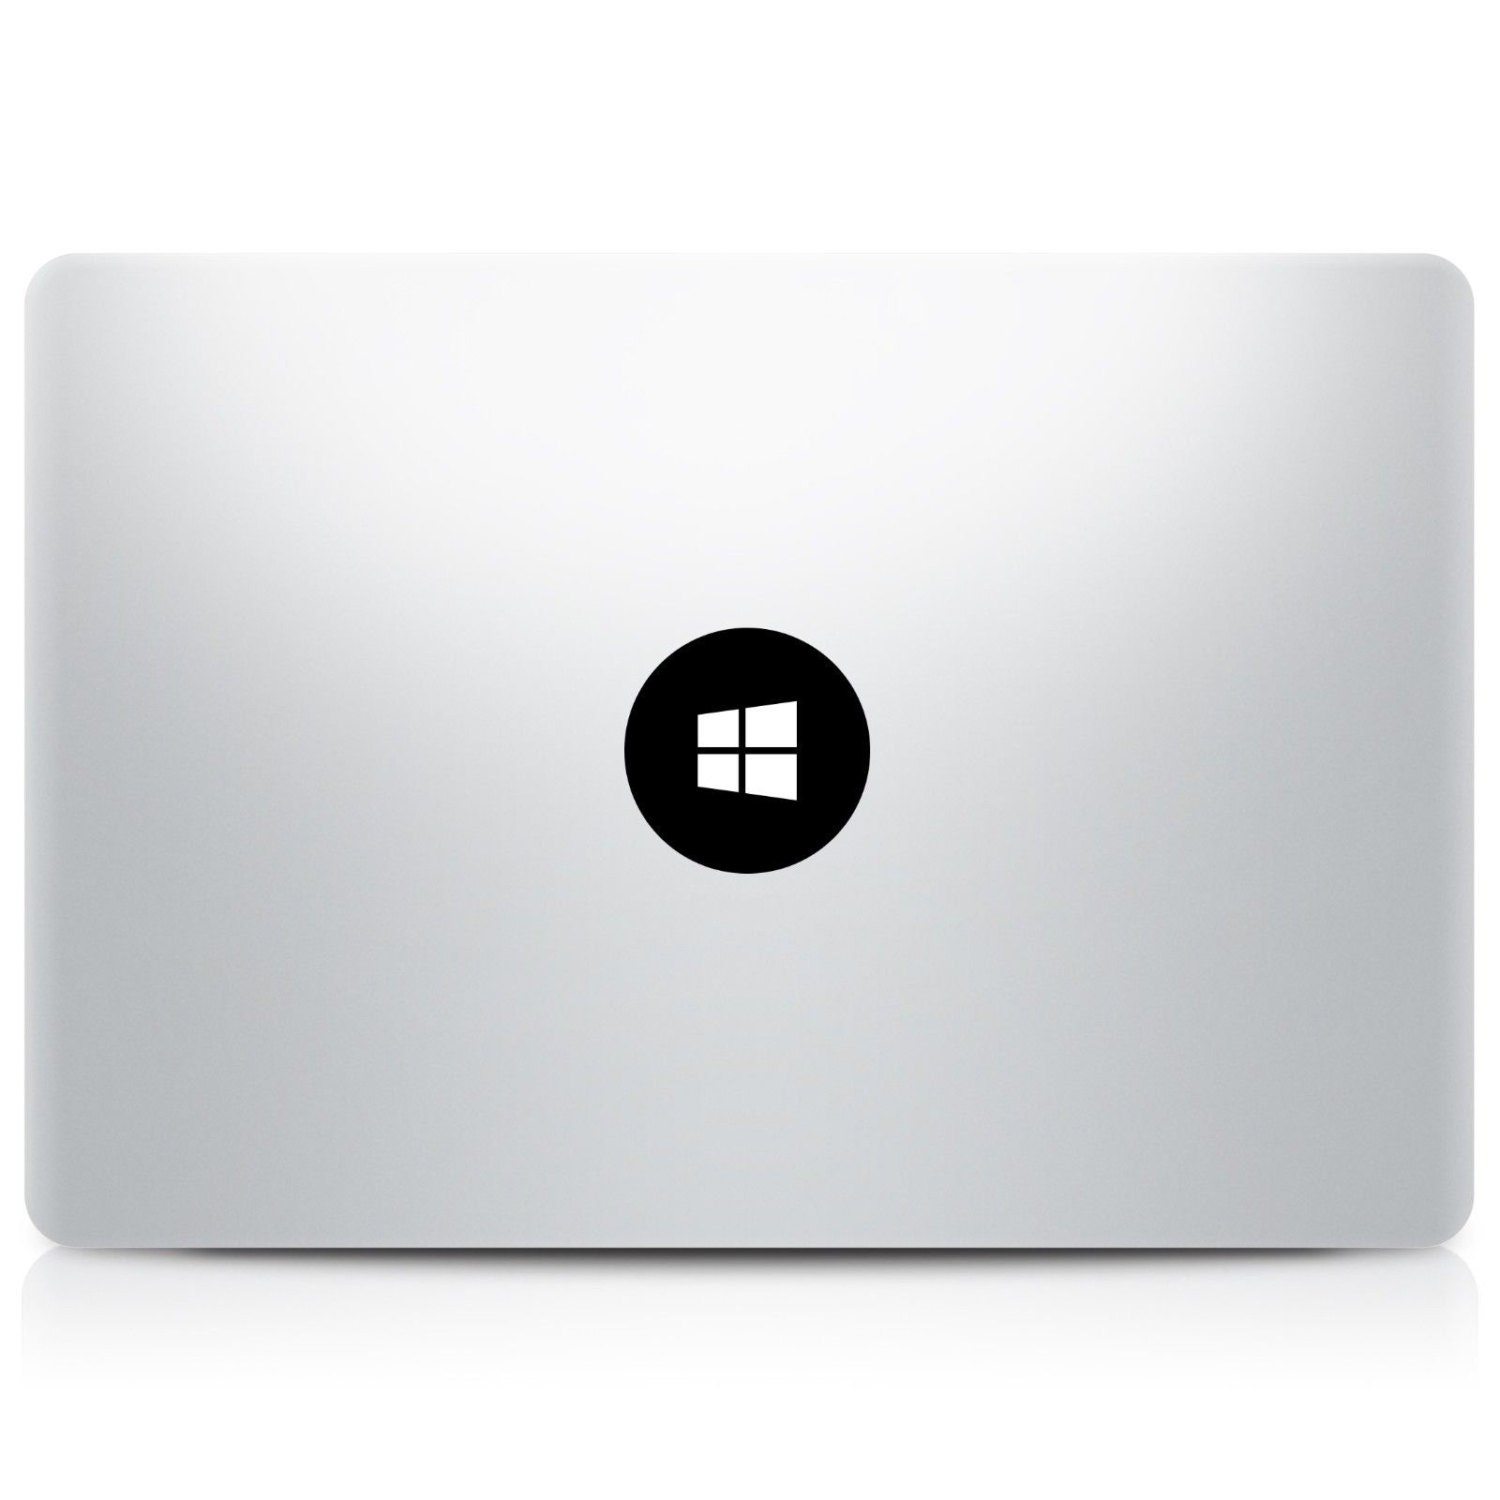 Windows Logo Macbook Decal Windows PC Macbook Sticker by DecalGuru